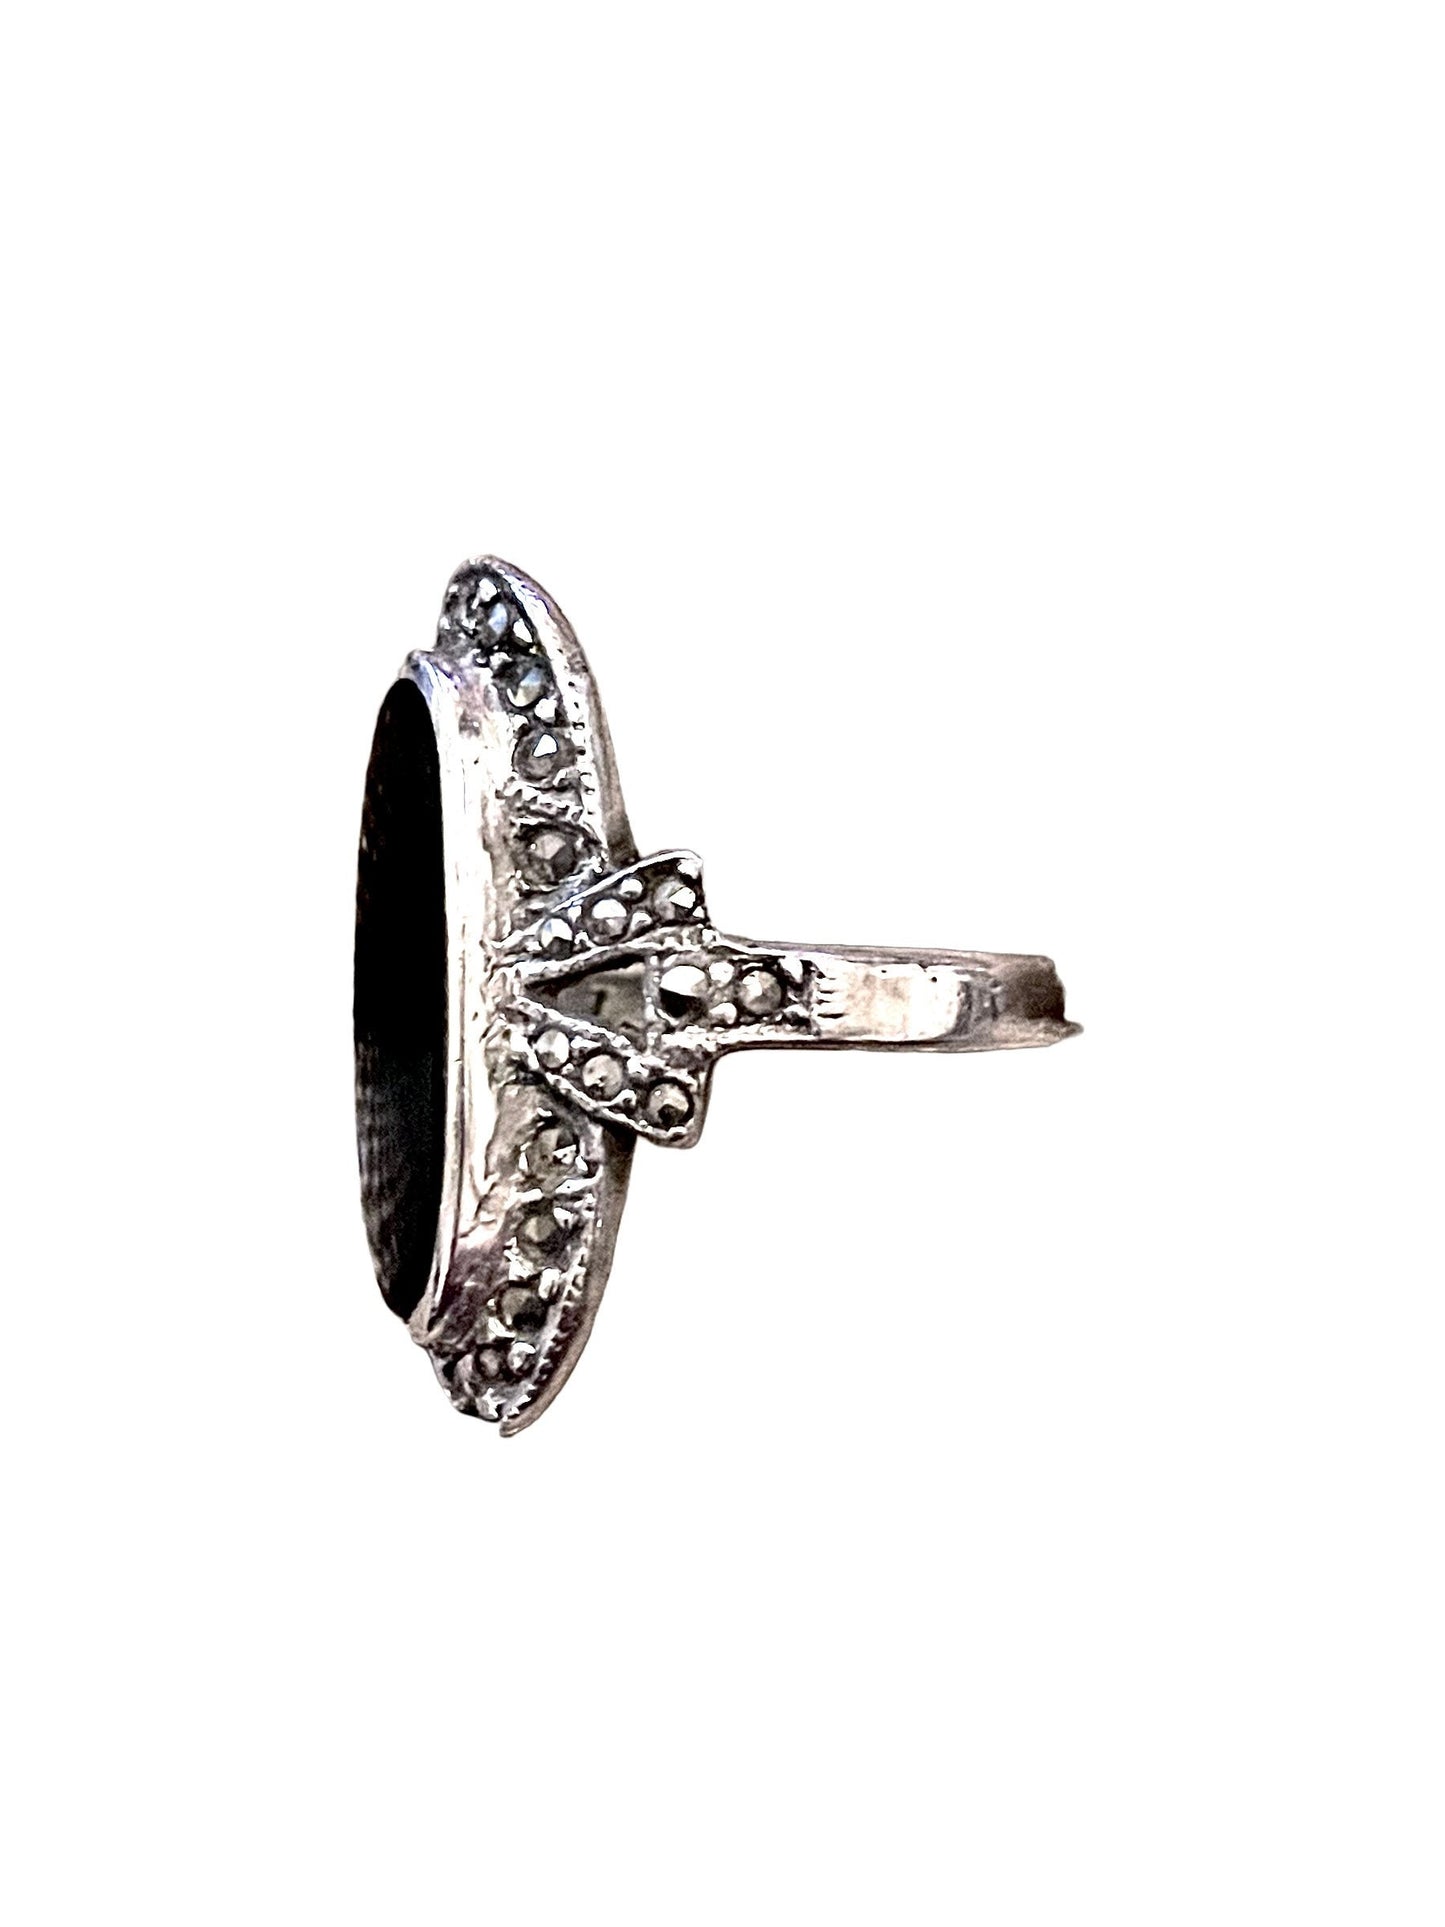 Black Onyx & Marcasite Bezel Set Sterling Silver Oval Art Deco Ring